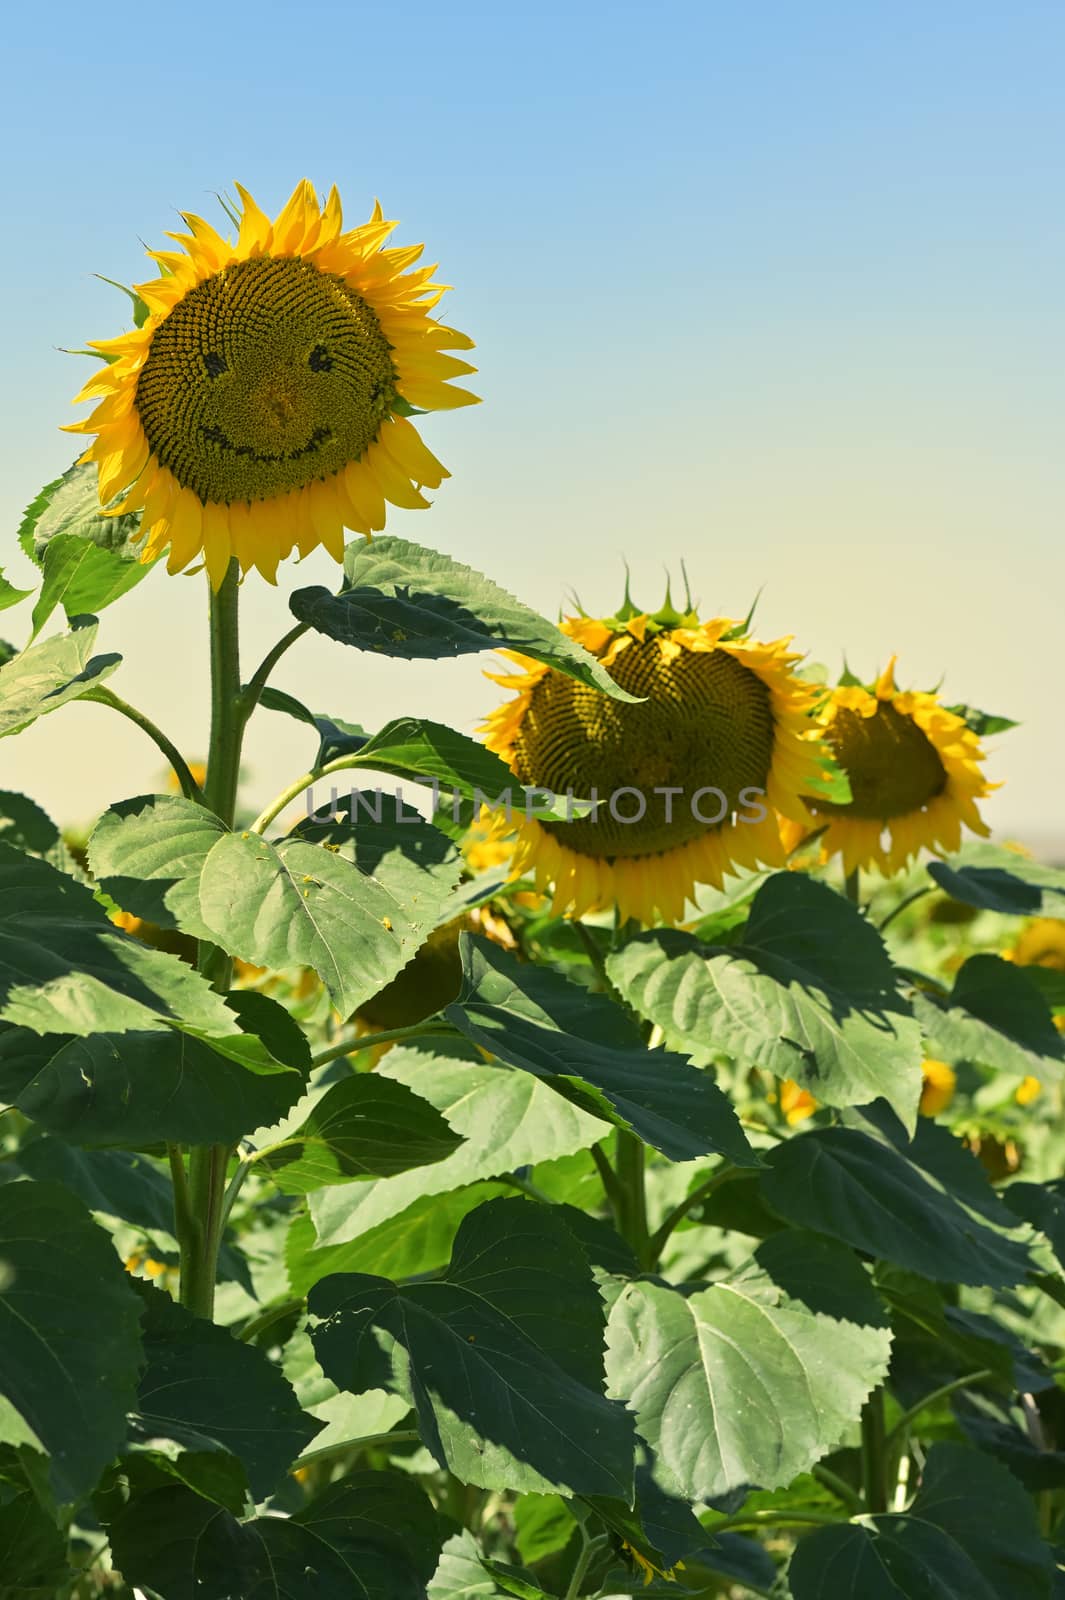 Smiling sunflower on summer field by jordachelr